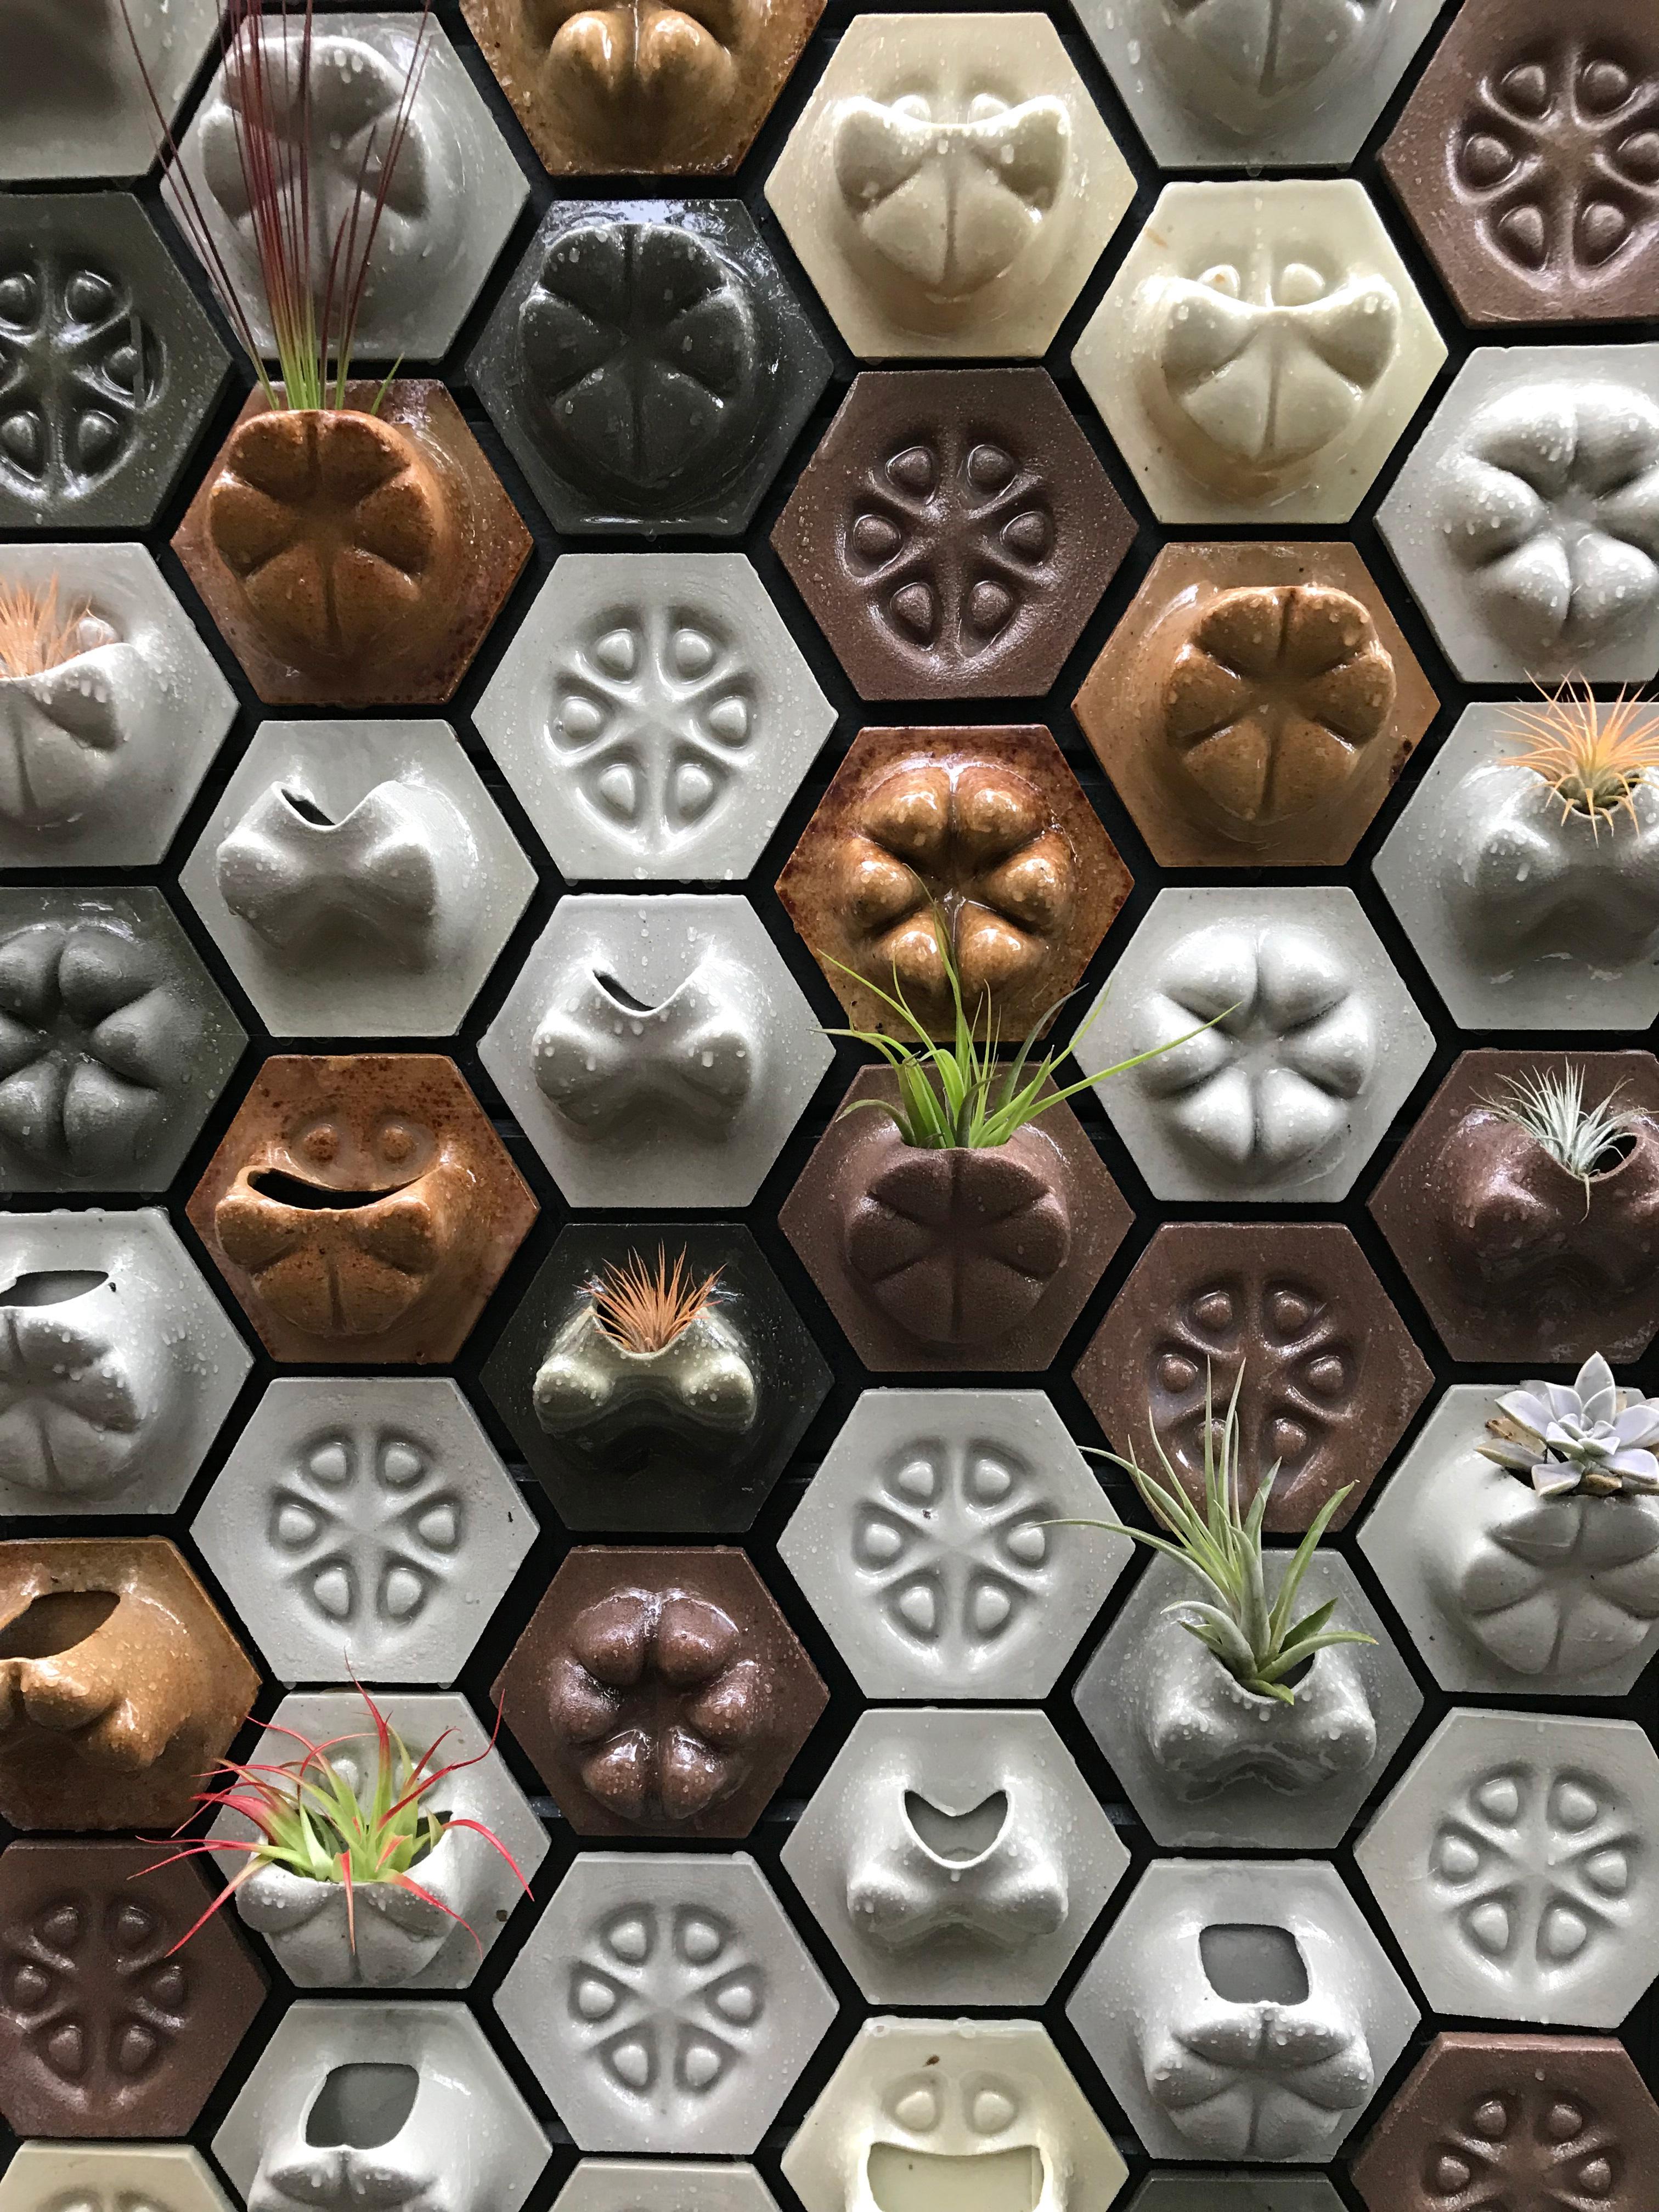 3D printed wood wall tiles.